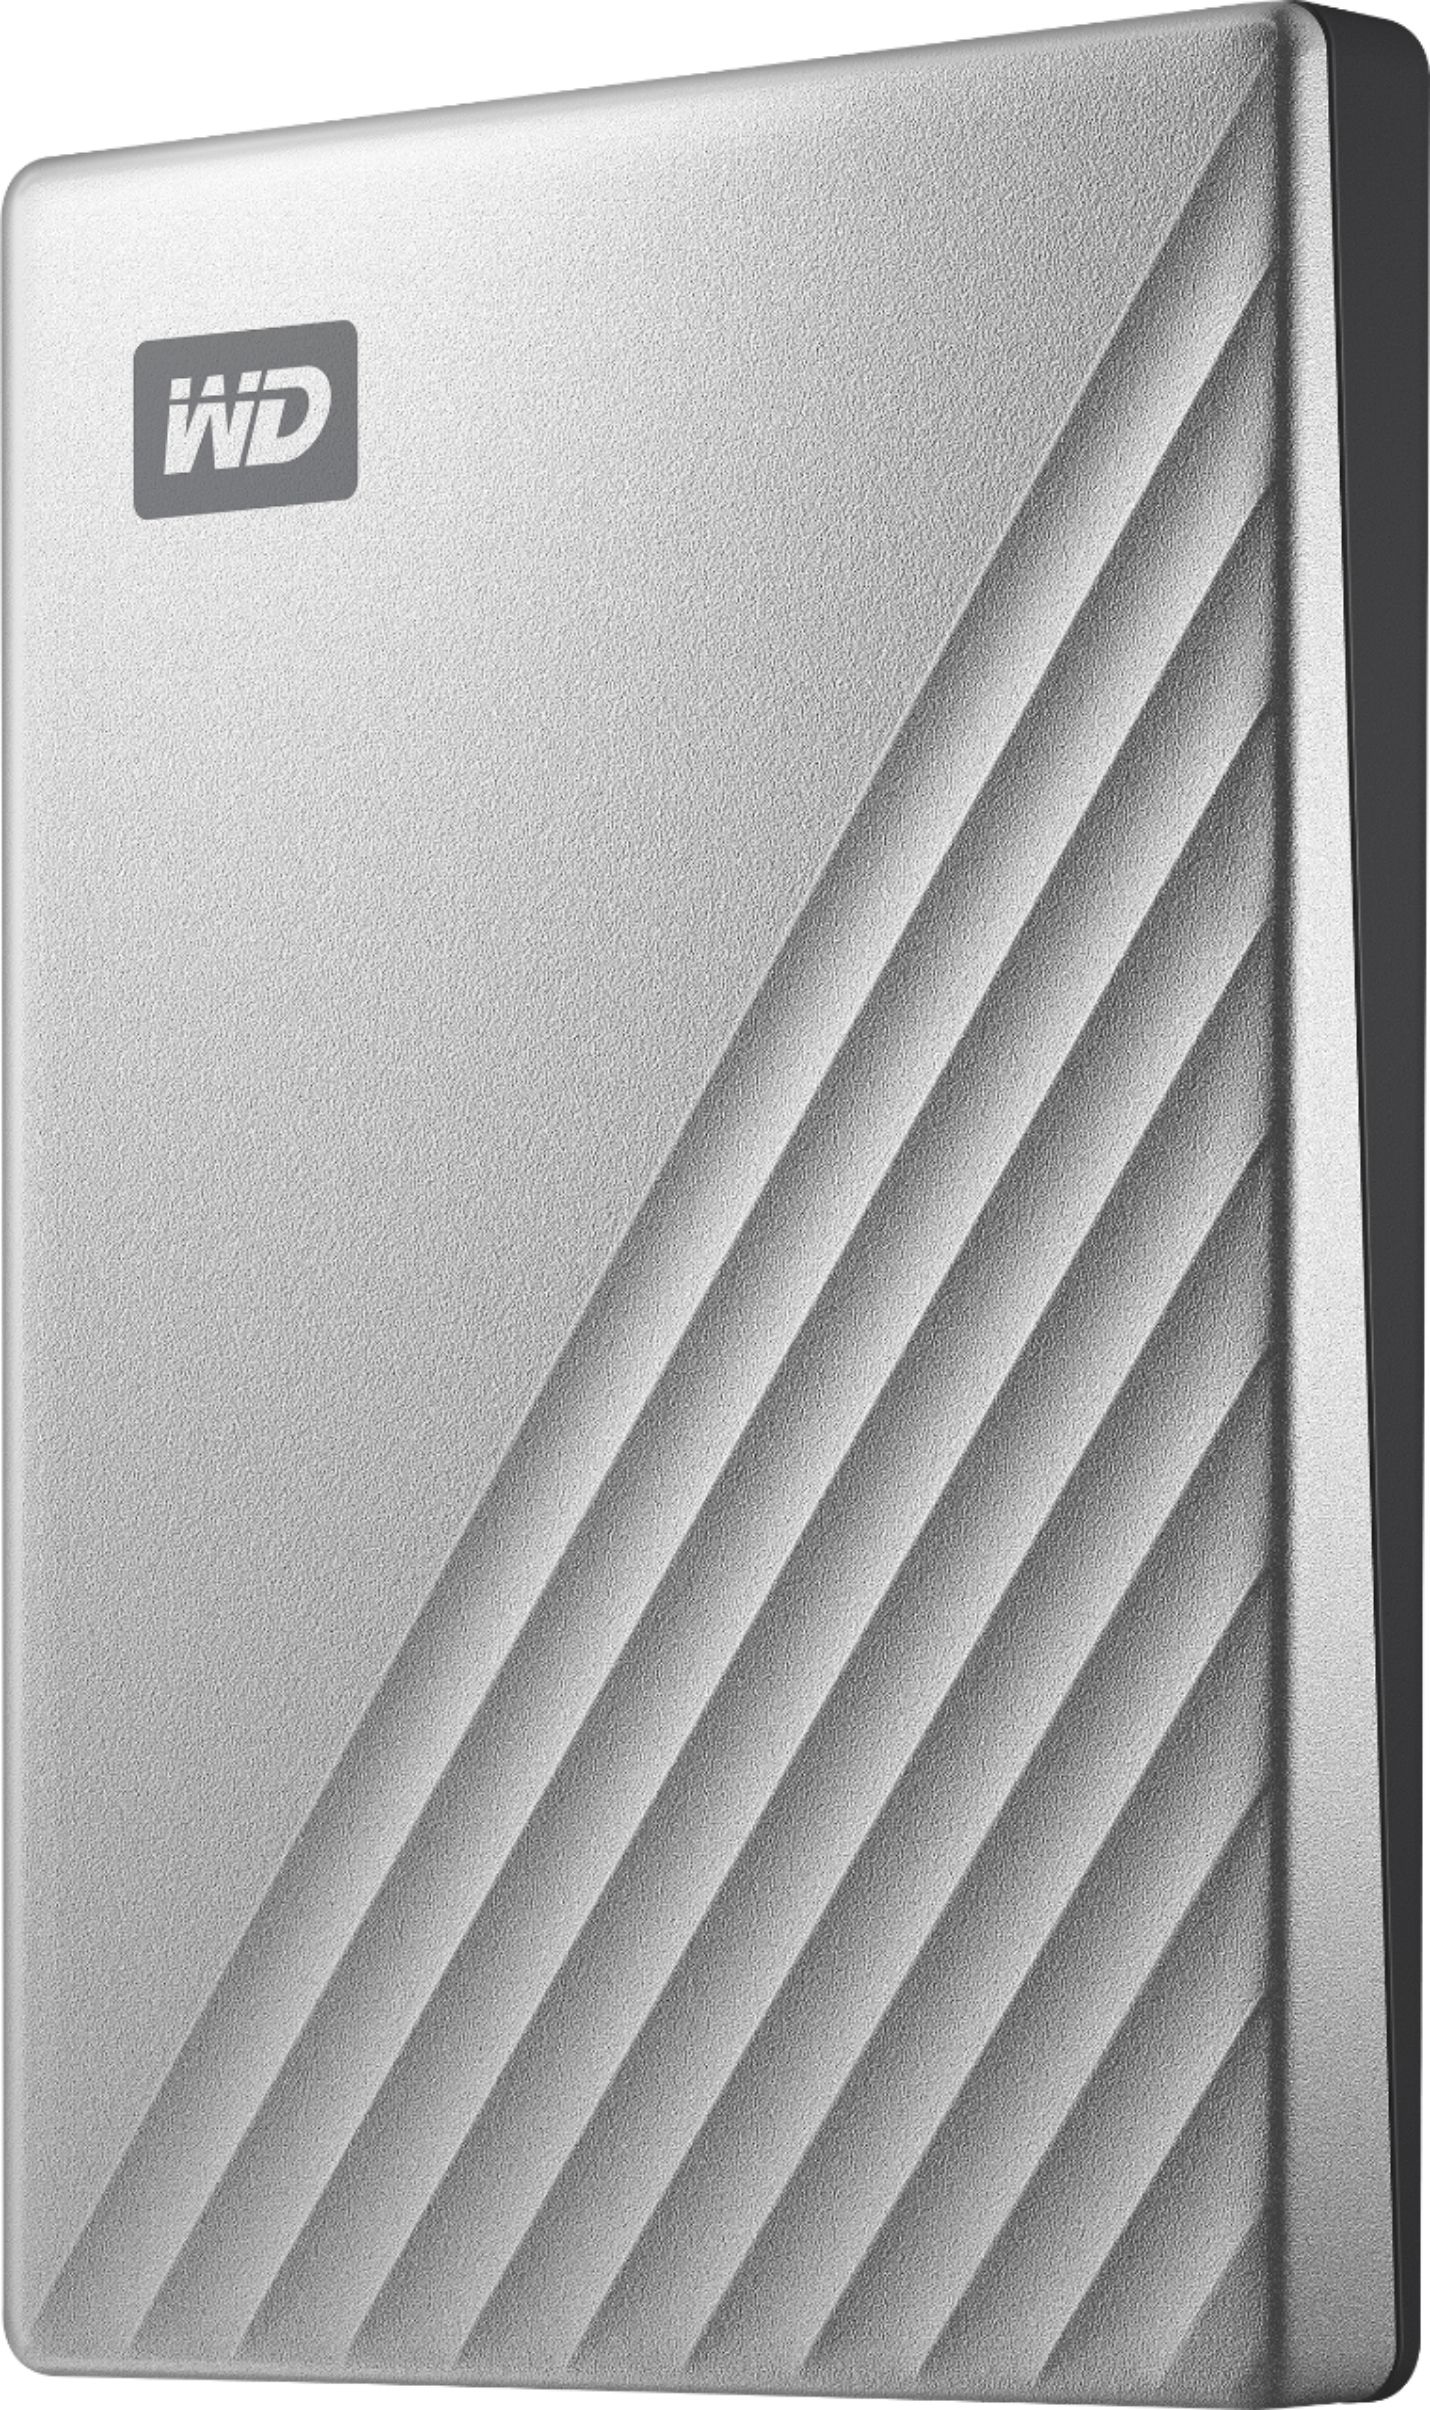 WD My Passport Ultra for Mac 2TB External USB 3.0 Portable Hard Drive  Silver WDBKYJ0020BSL-WESN - Best Buy